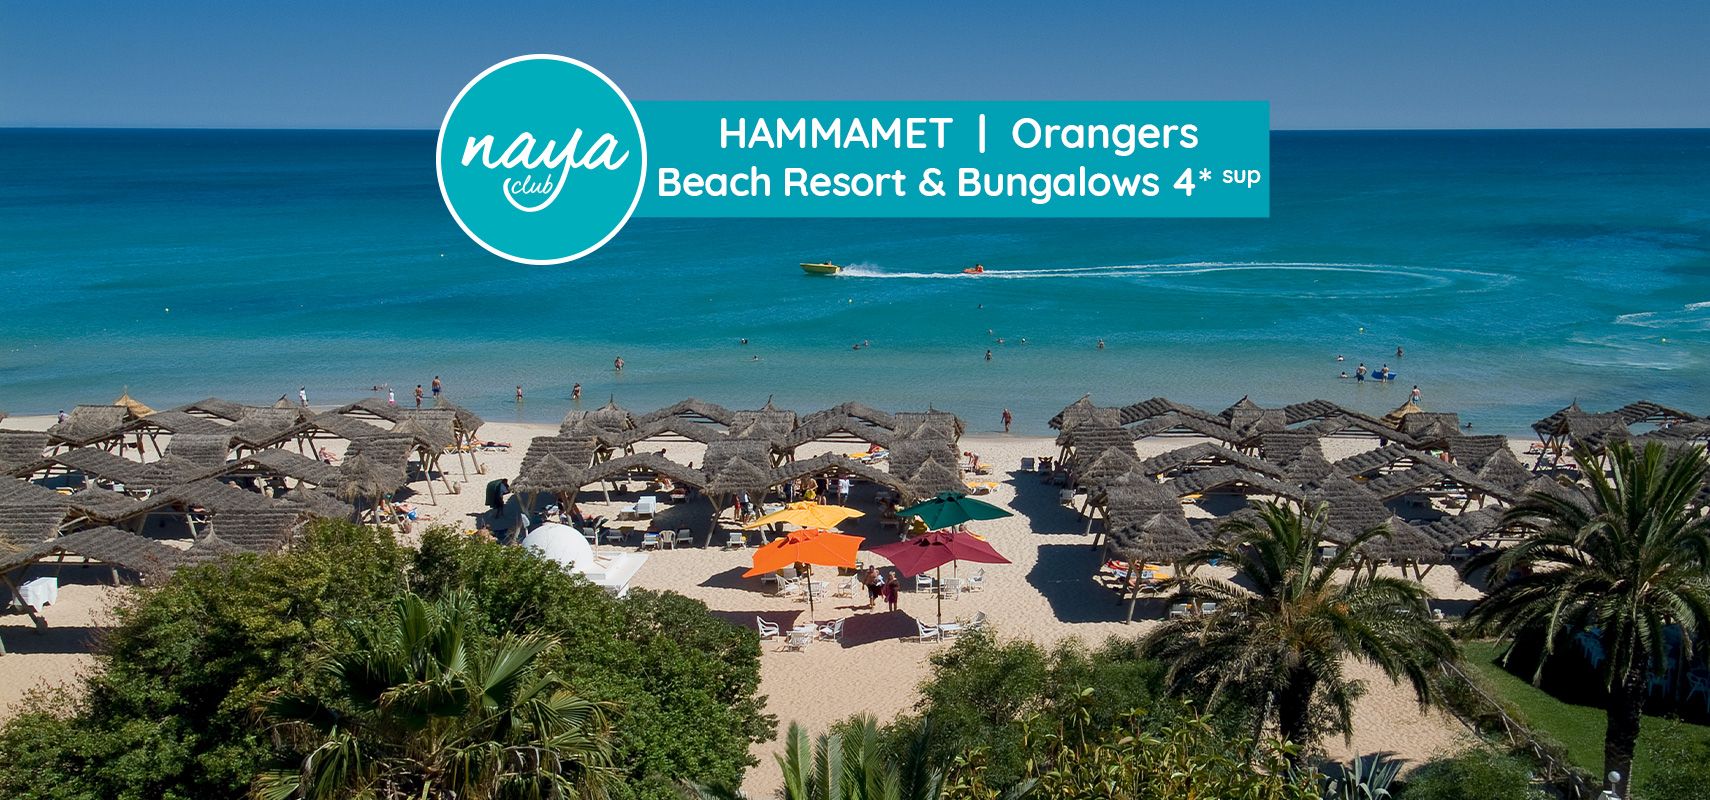 Naya Club Hôtel Orangers Beach Resort 4*Sup pas cher photo 1